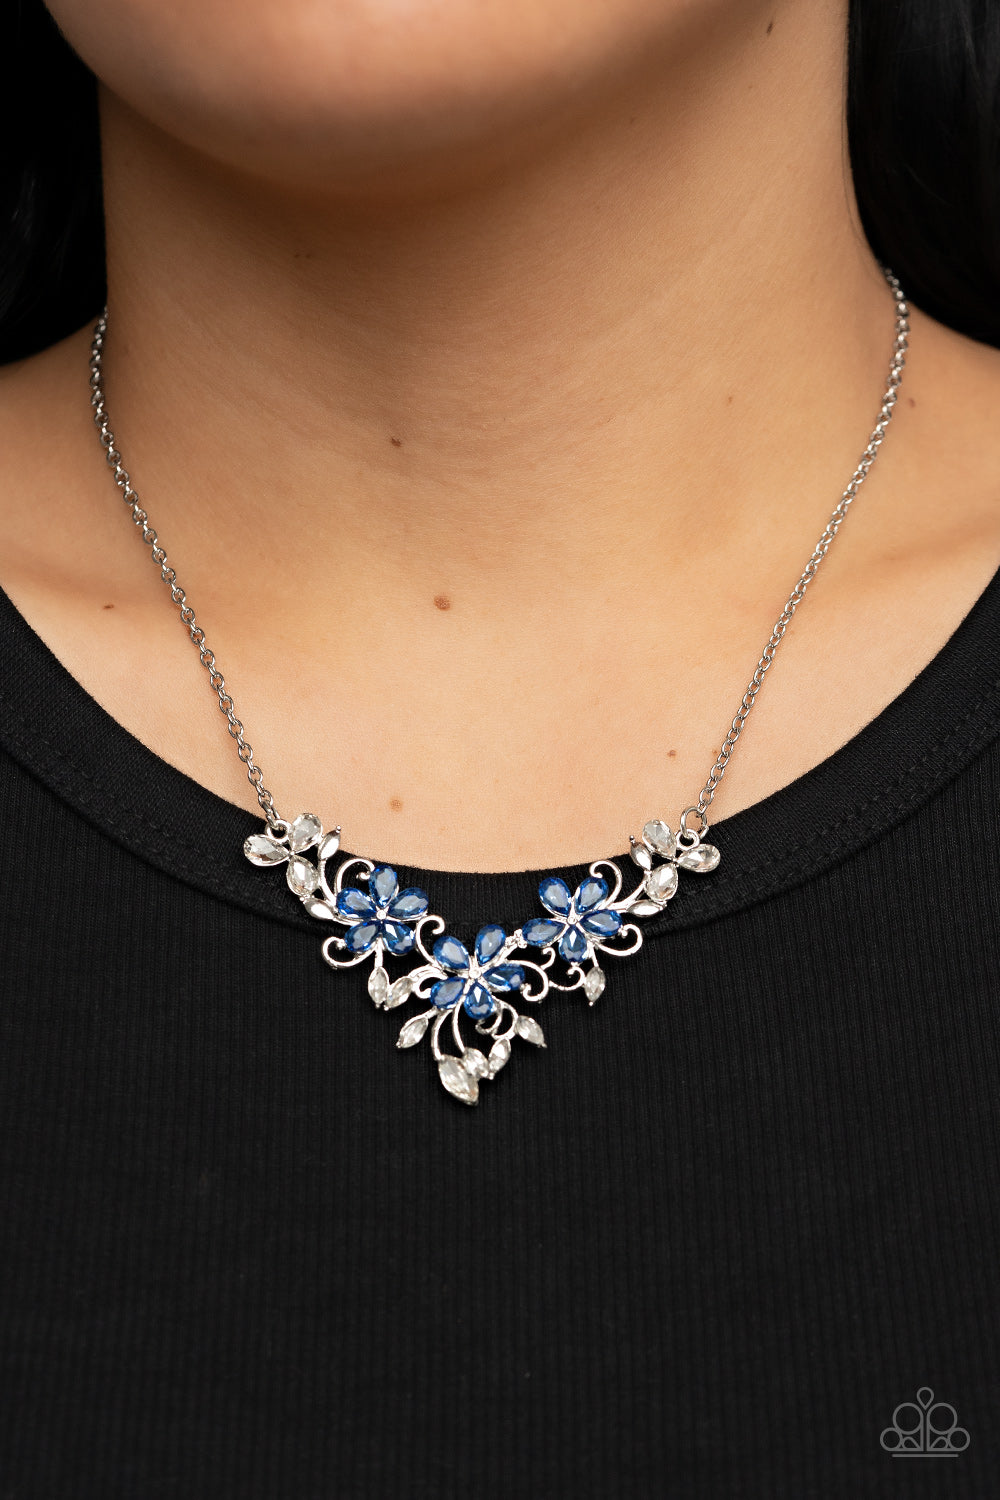 Paparazzi - “Floral Fashion Show” Blue Necklace Earring Set